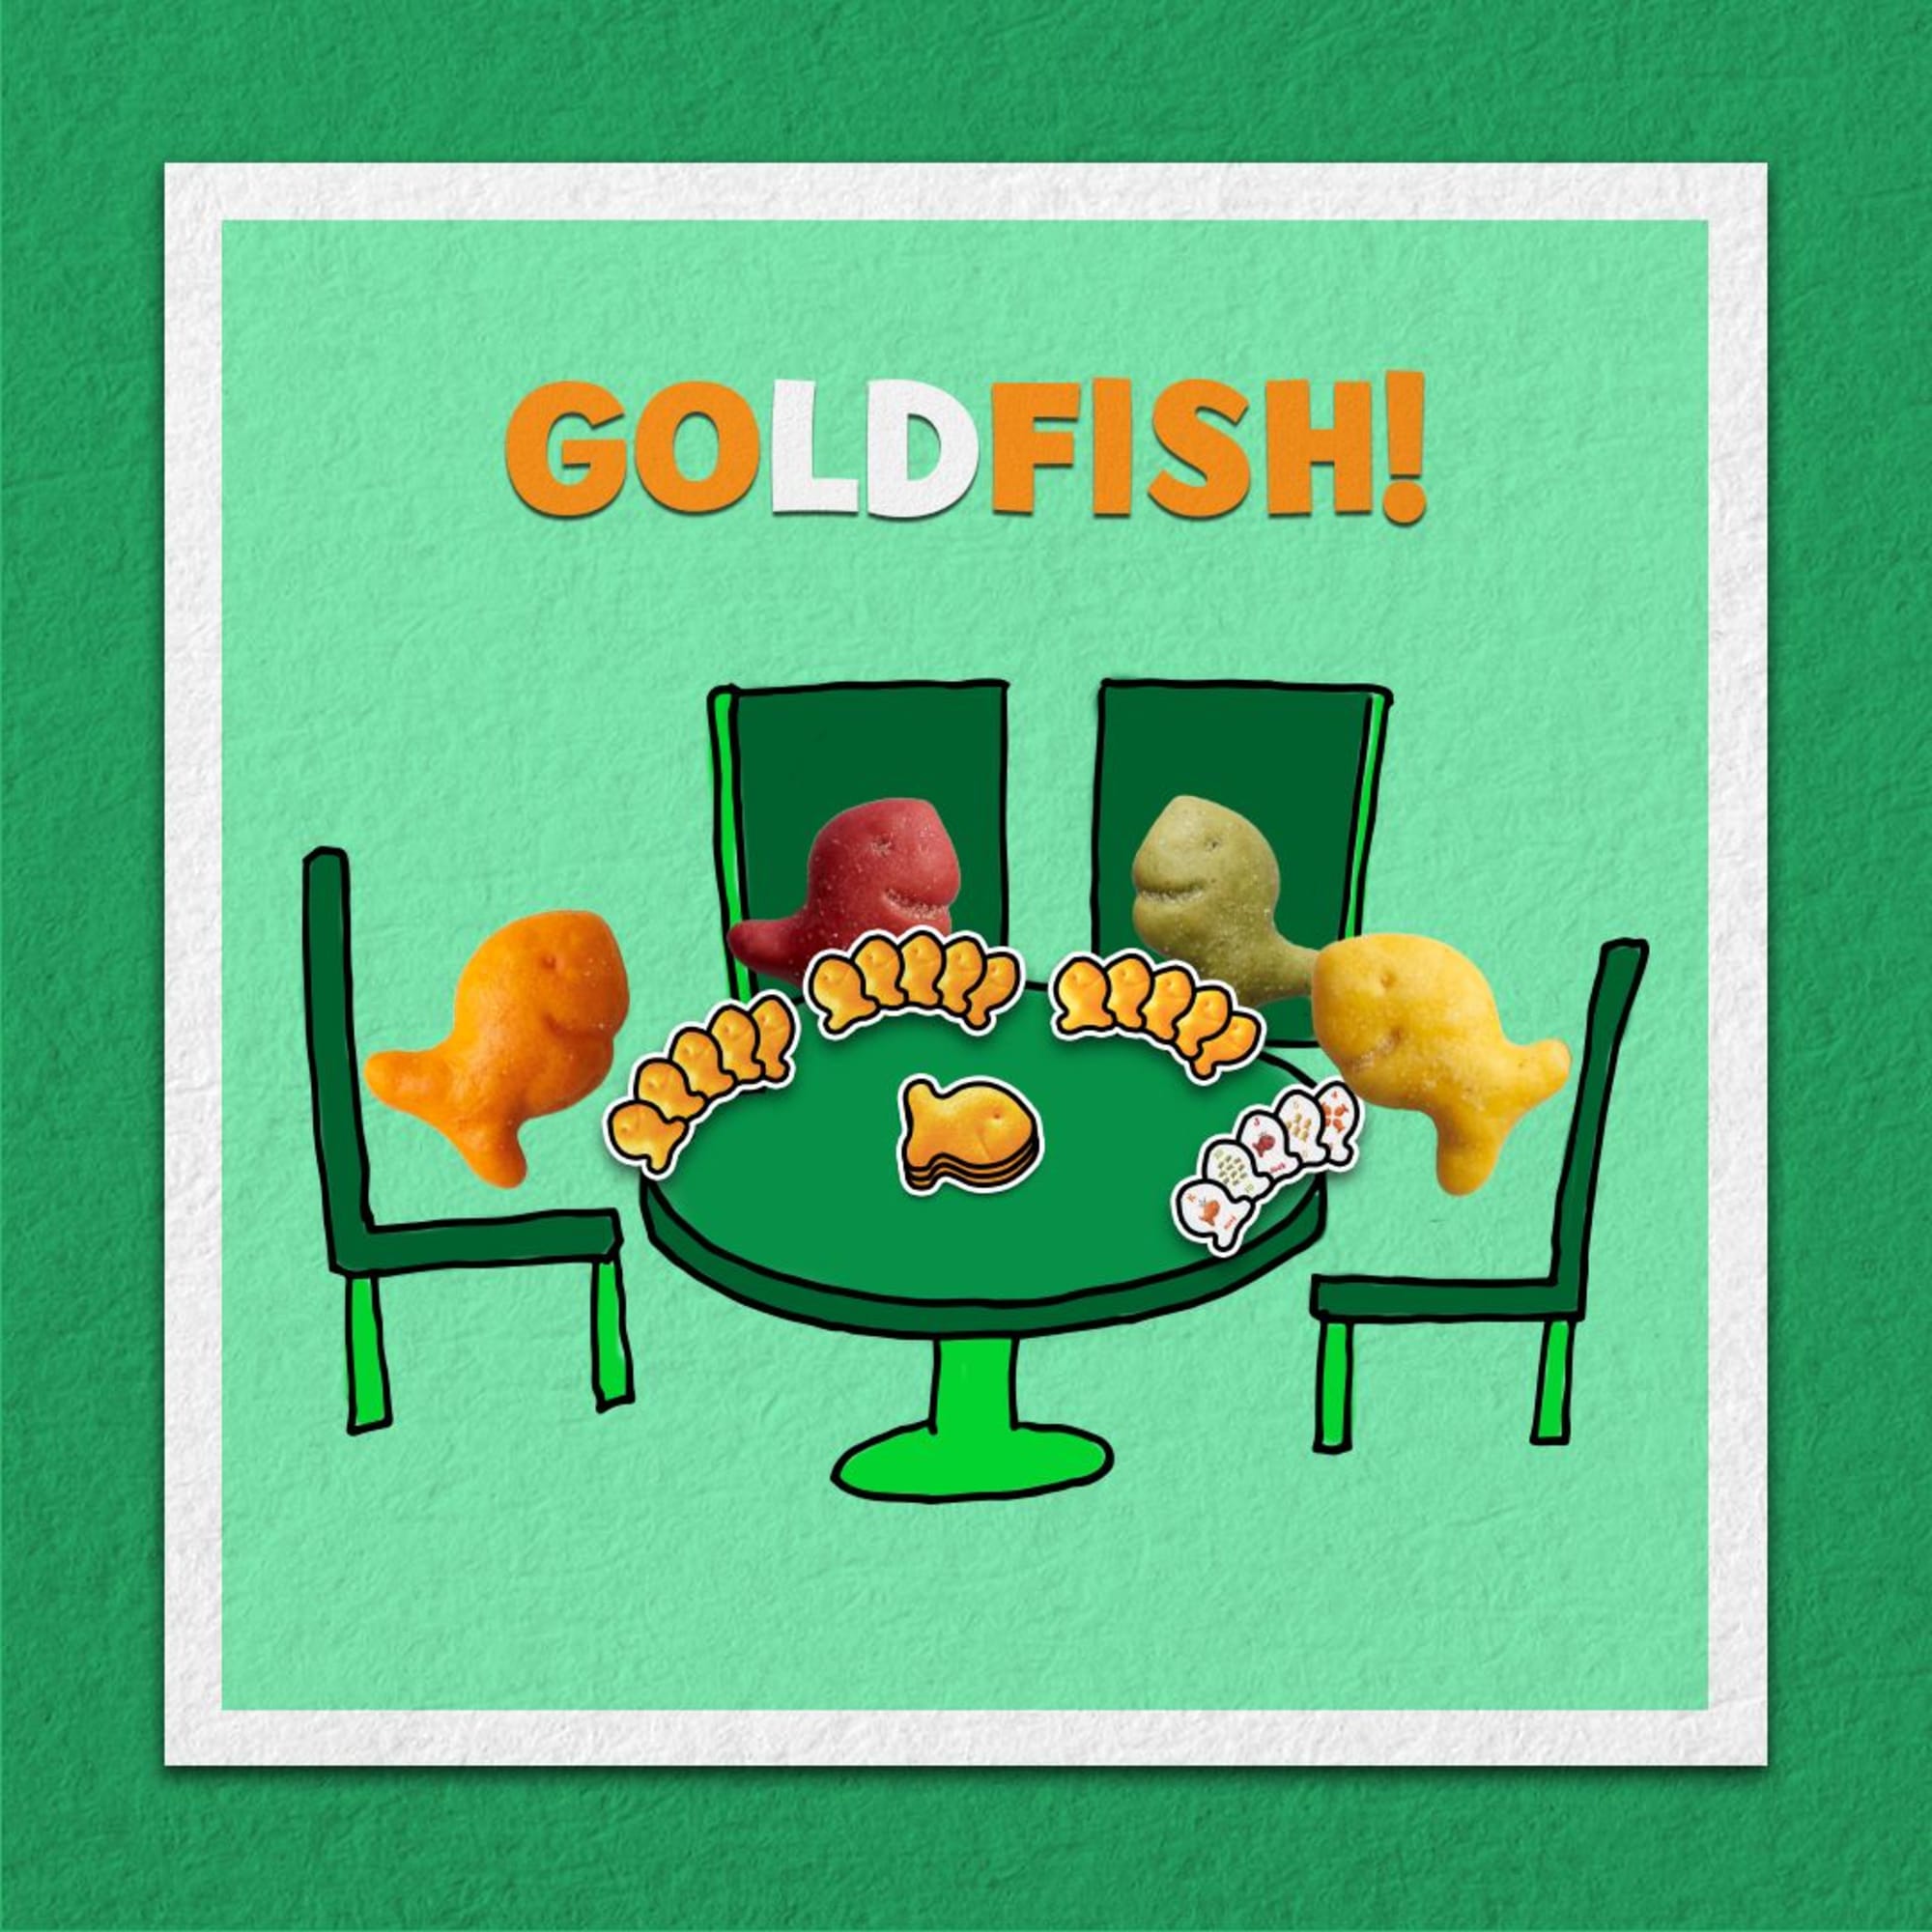 goldfish-celebrates-family-game-night-with-goldfish-card-game